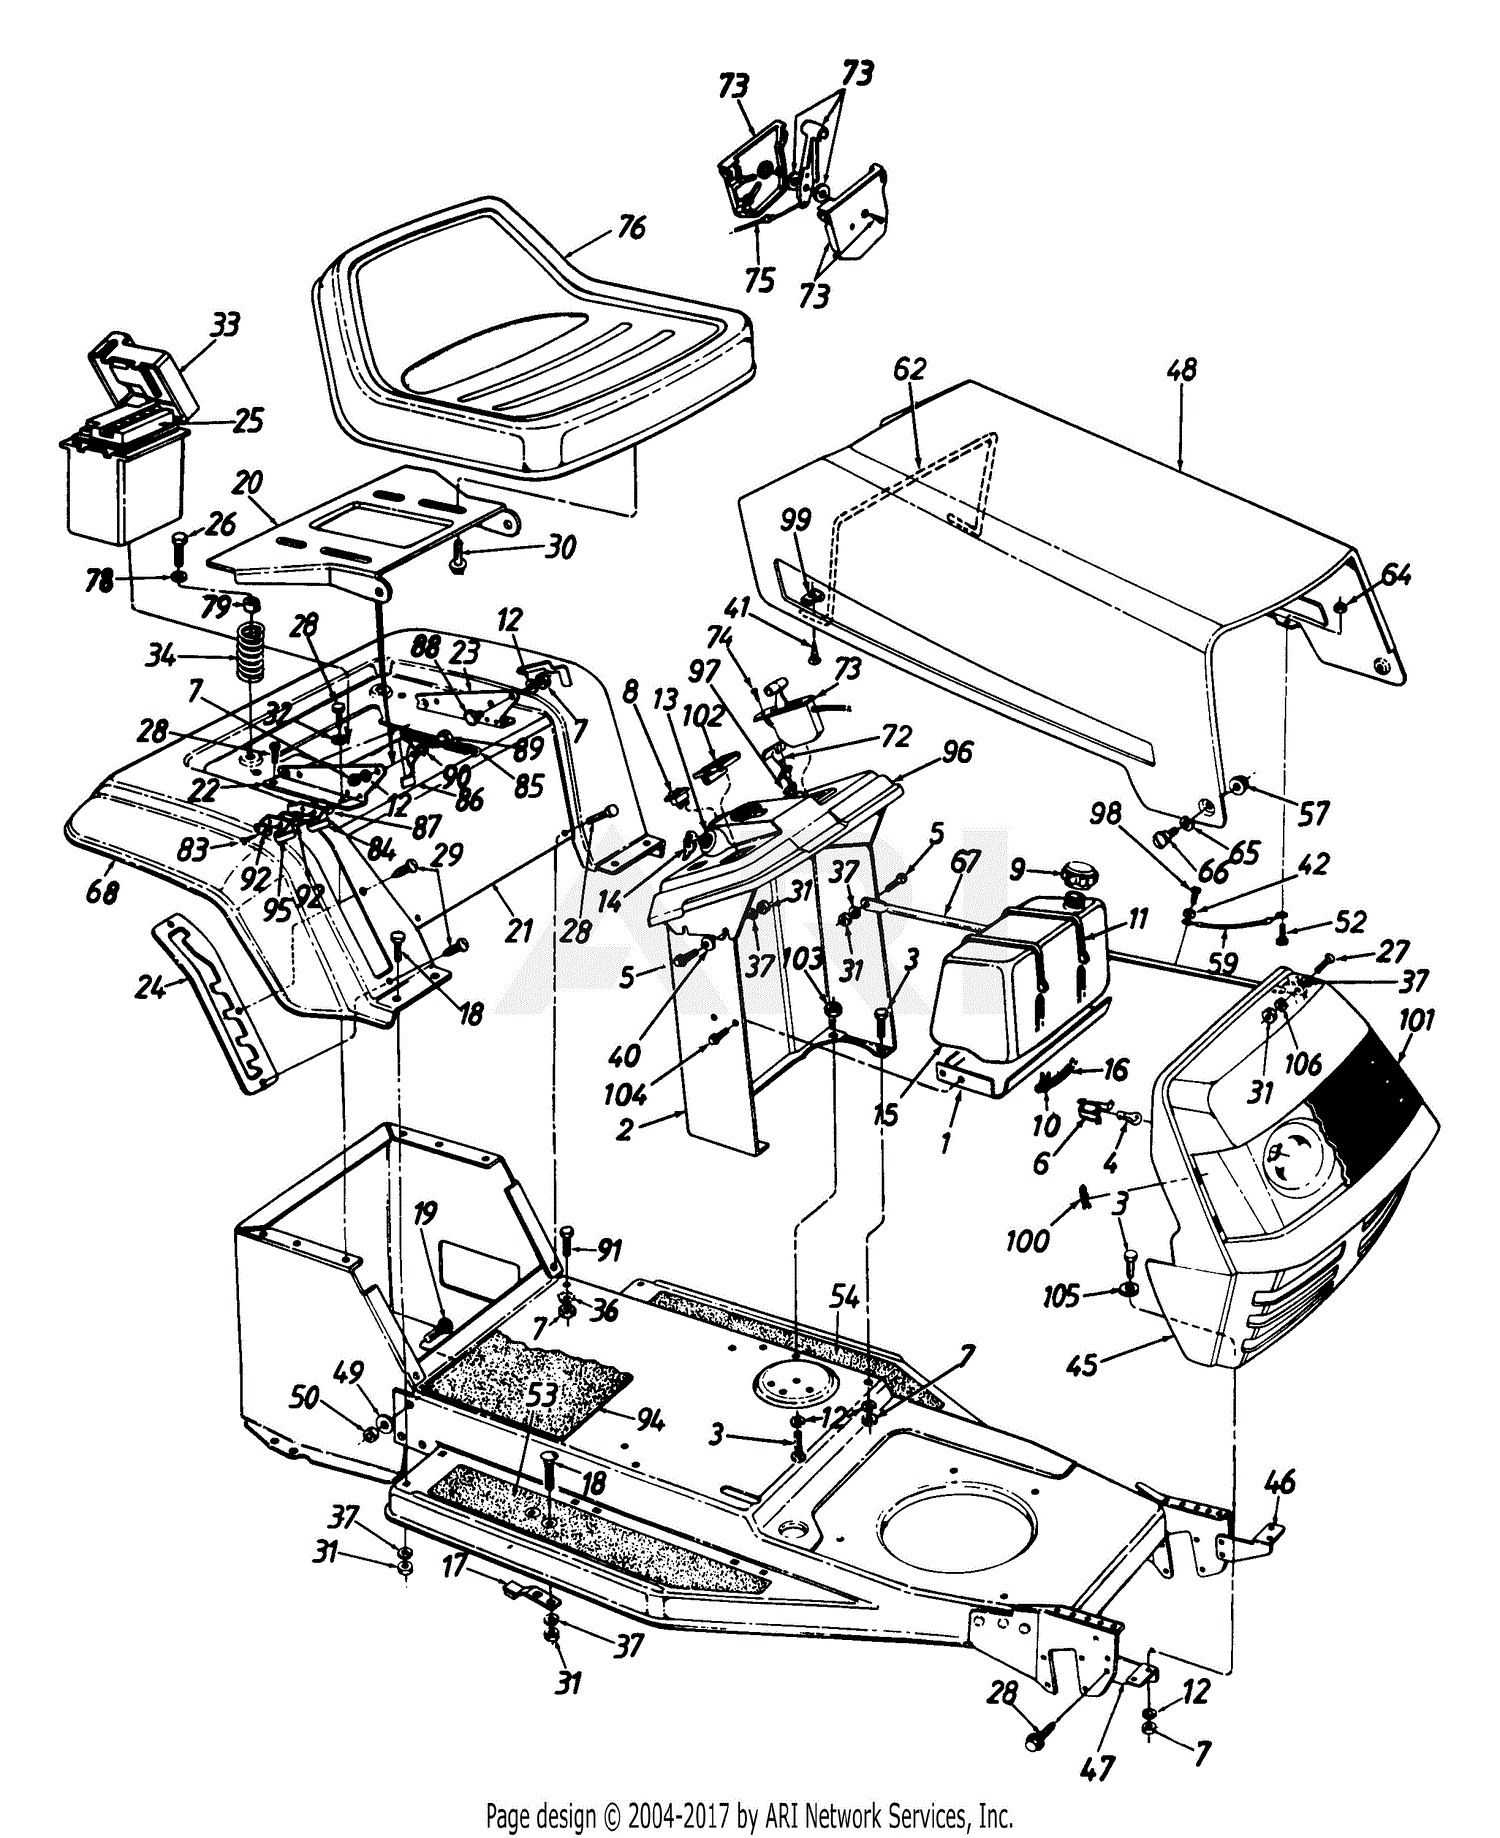 34 Mtd Lawn Mower Parts Diagram - Wiring Diagram List